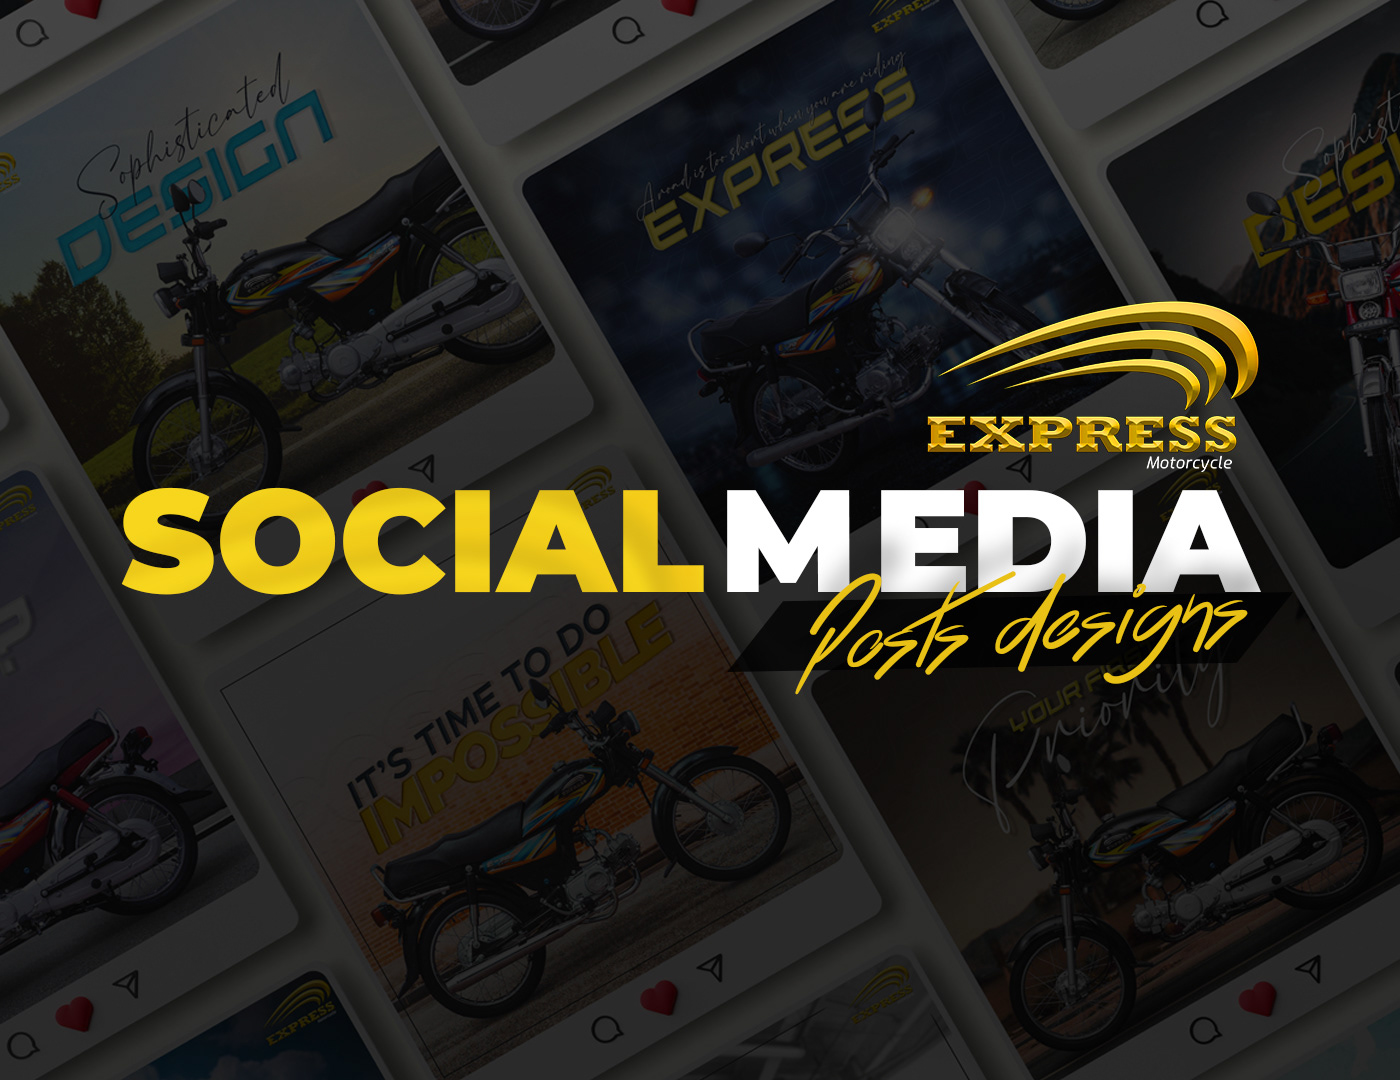 Bike design gráfico express motorcycles Helmet mechanics motorbike social media social media motorcycle Social media post Socialmedia